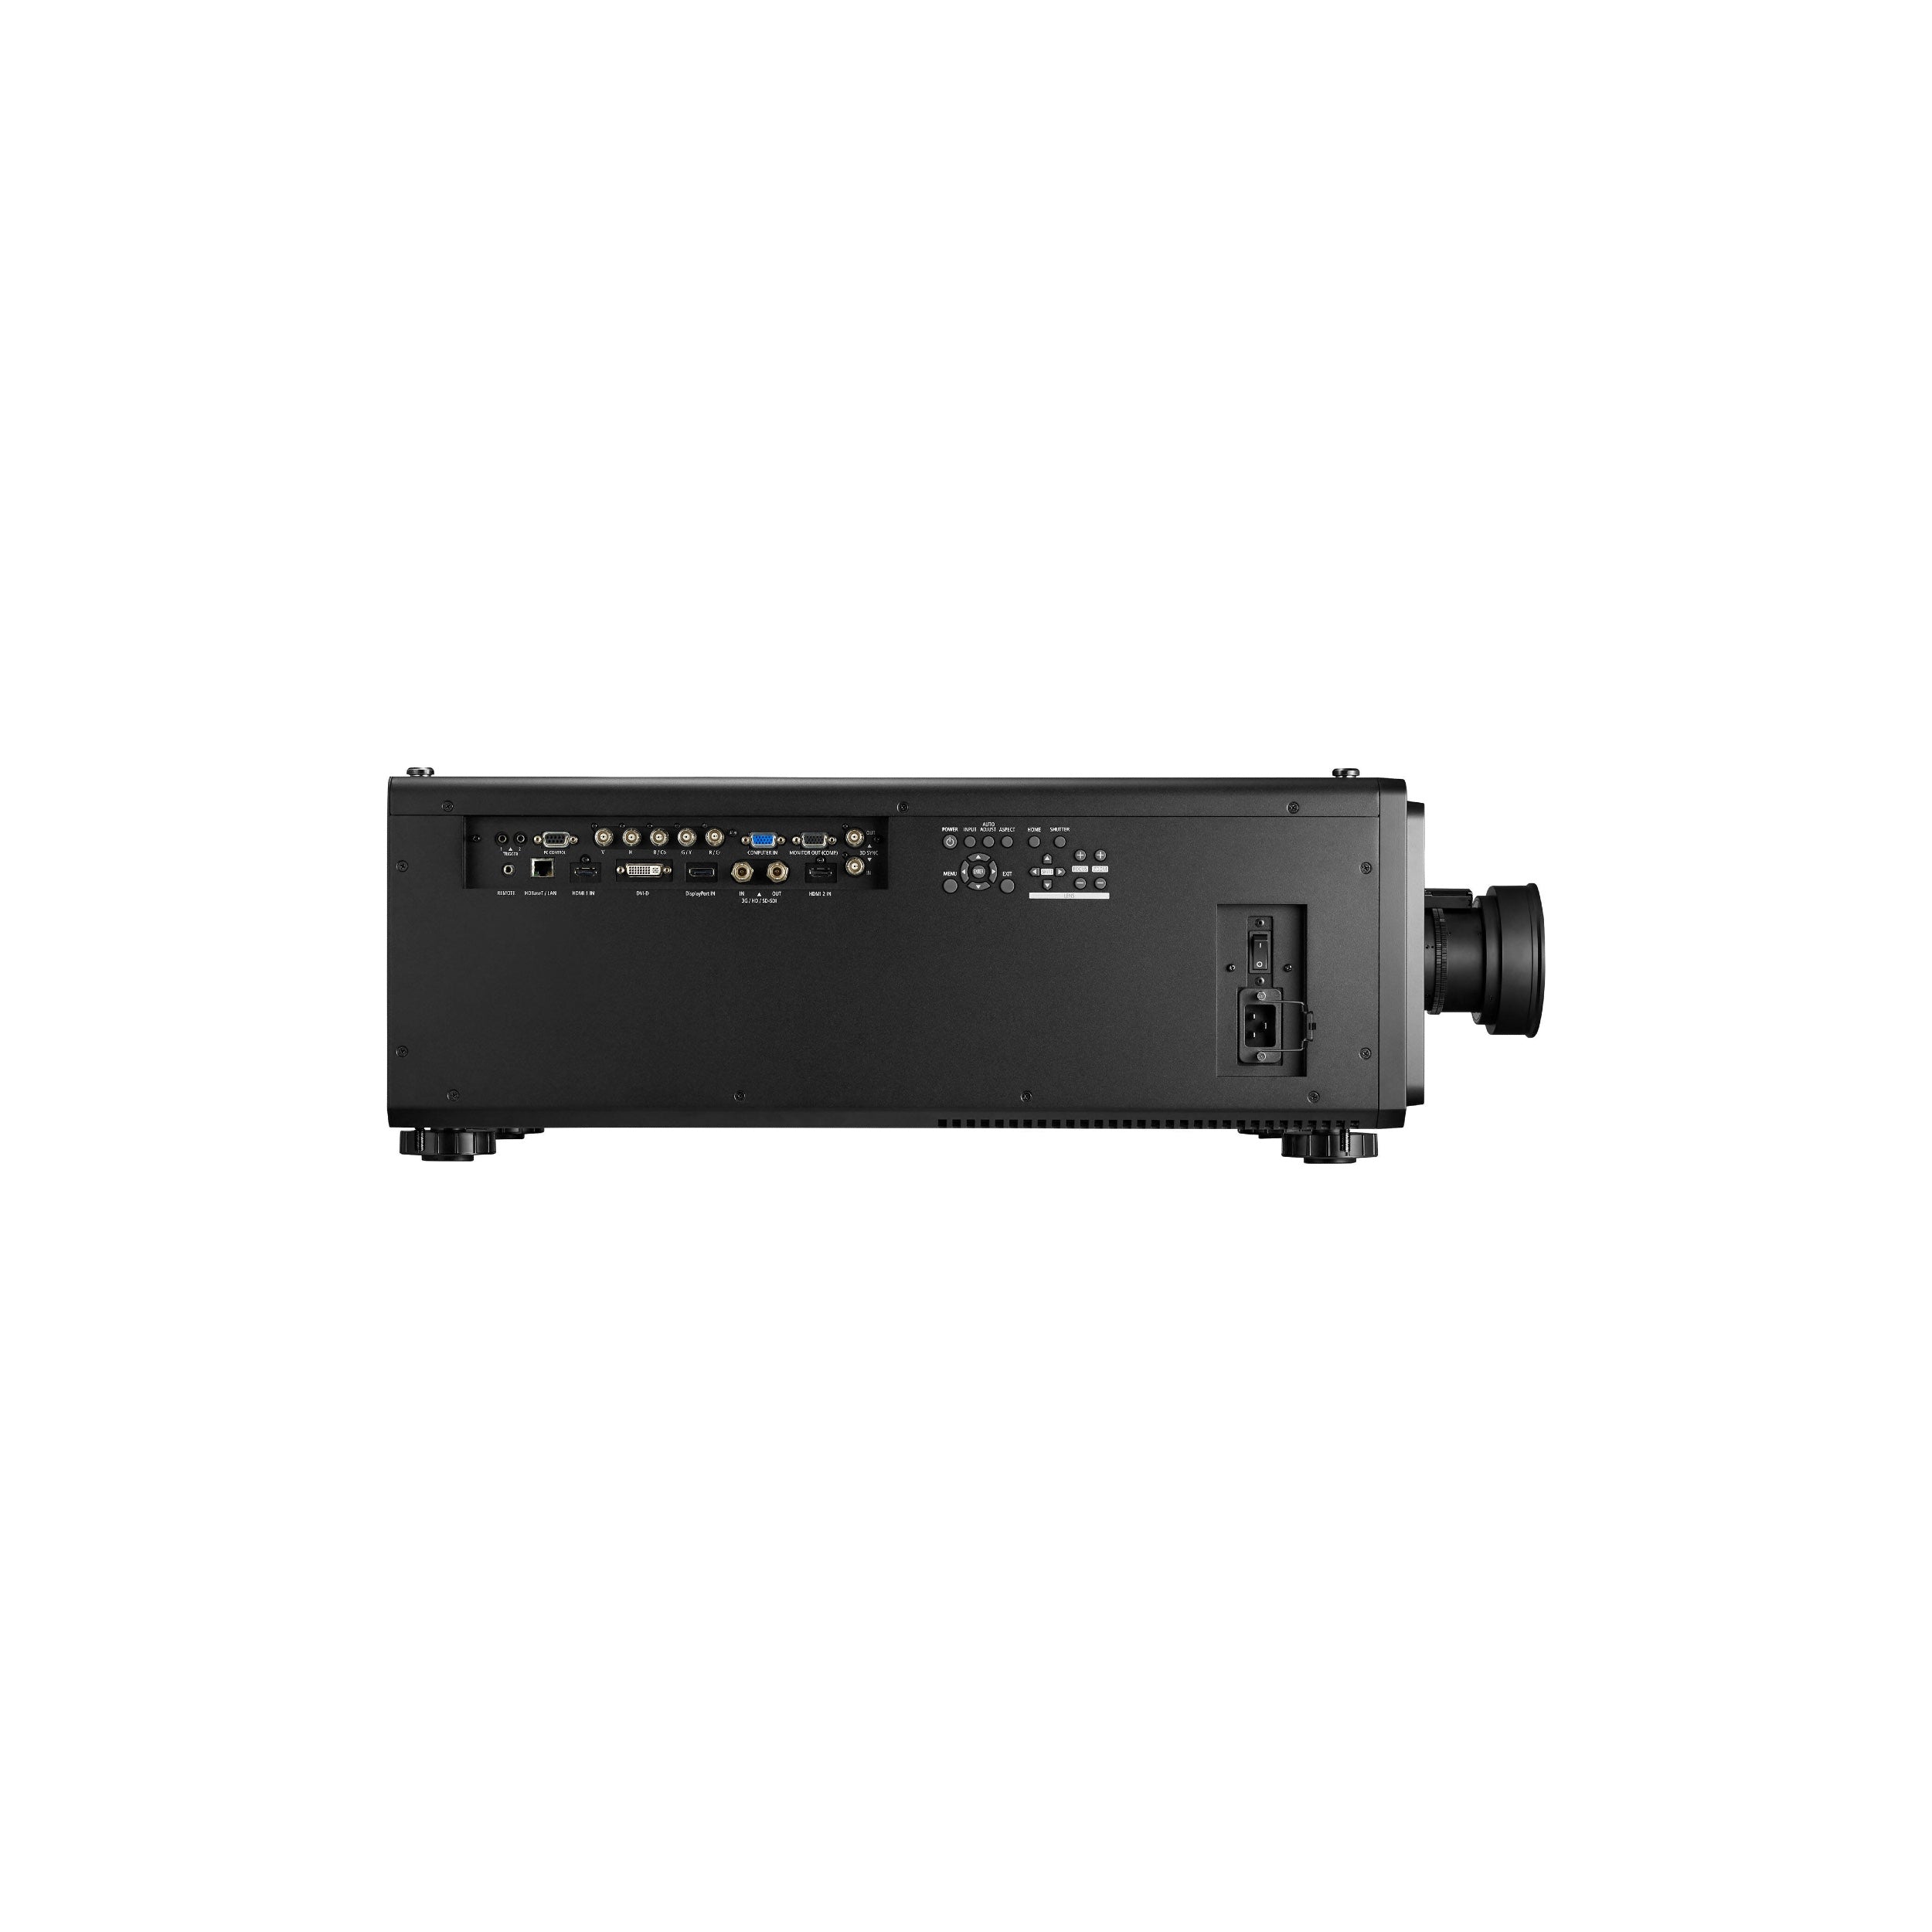 NEC NP-PX2201UL 21,500-Lumen WUXGA Laser DLP Projector (No Lens)